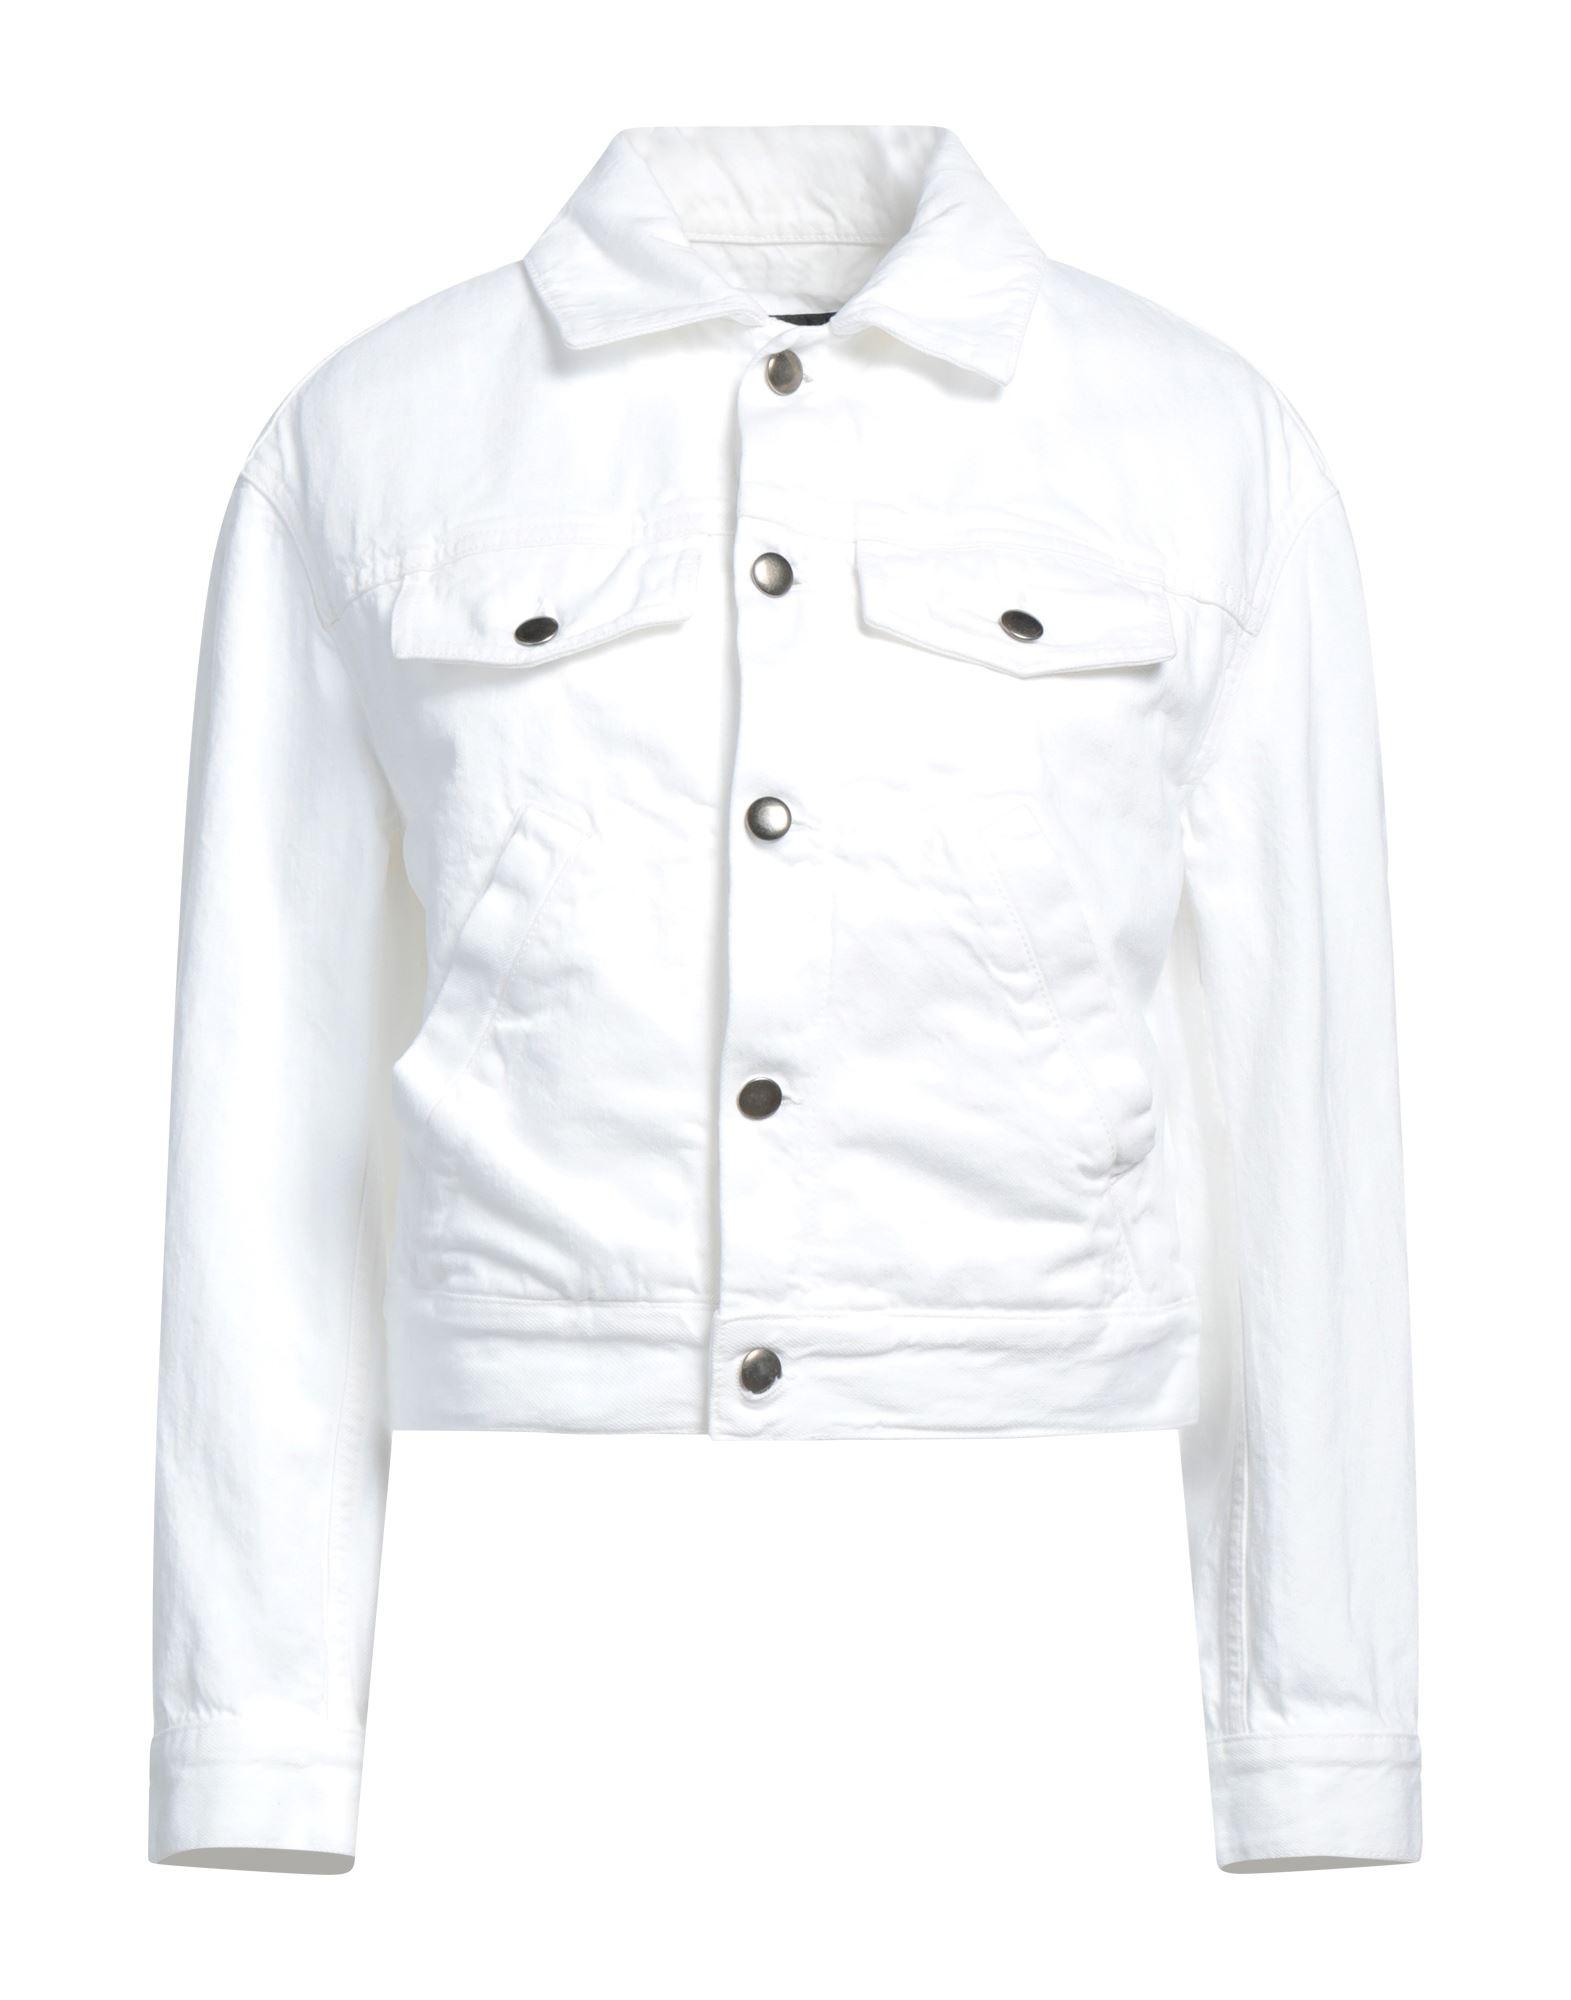 Ann Demeulemeester Denim Outerwear in White | Lyst